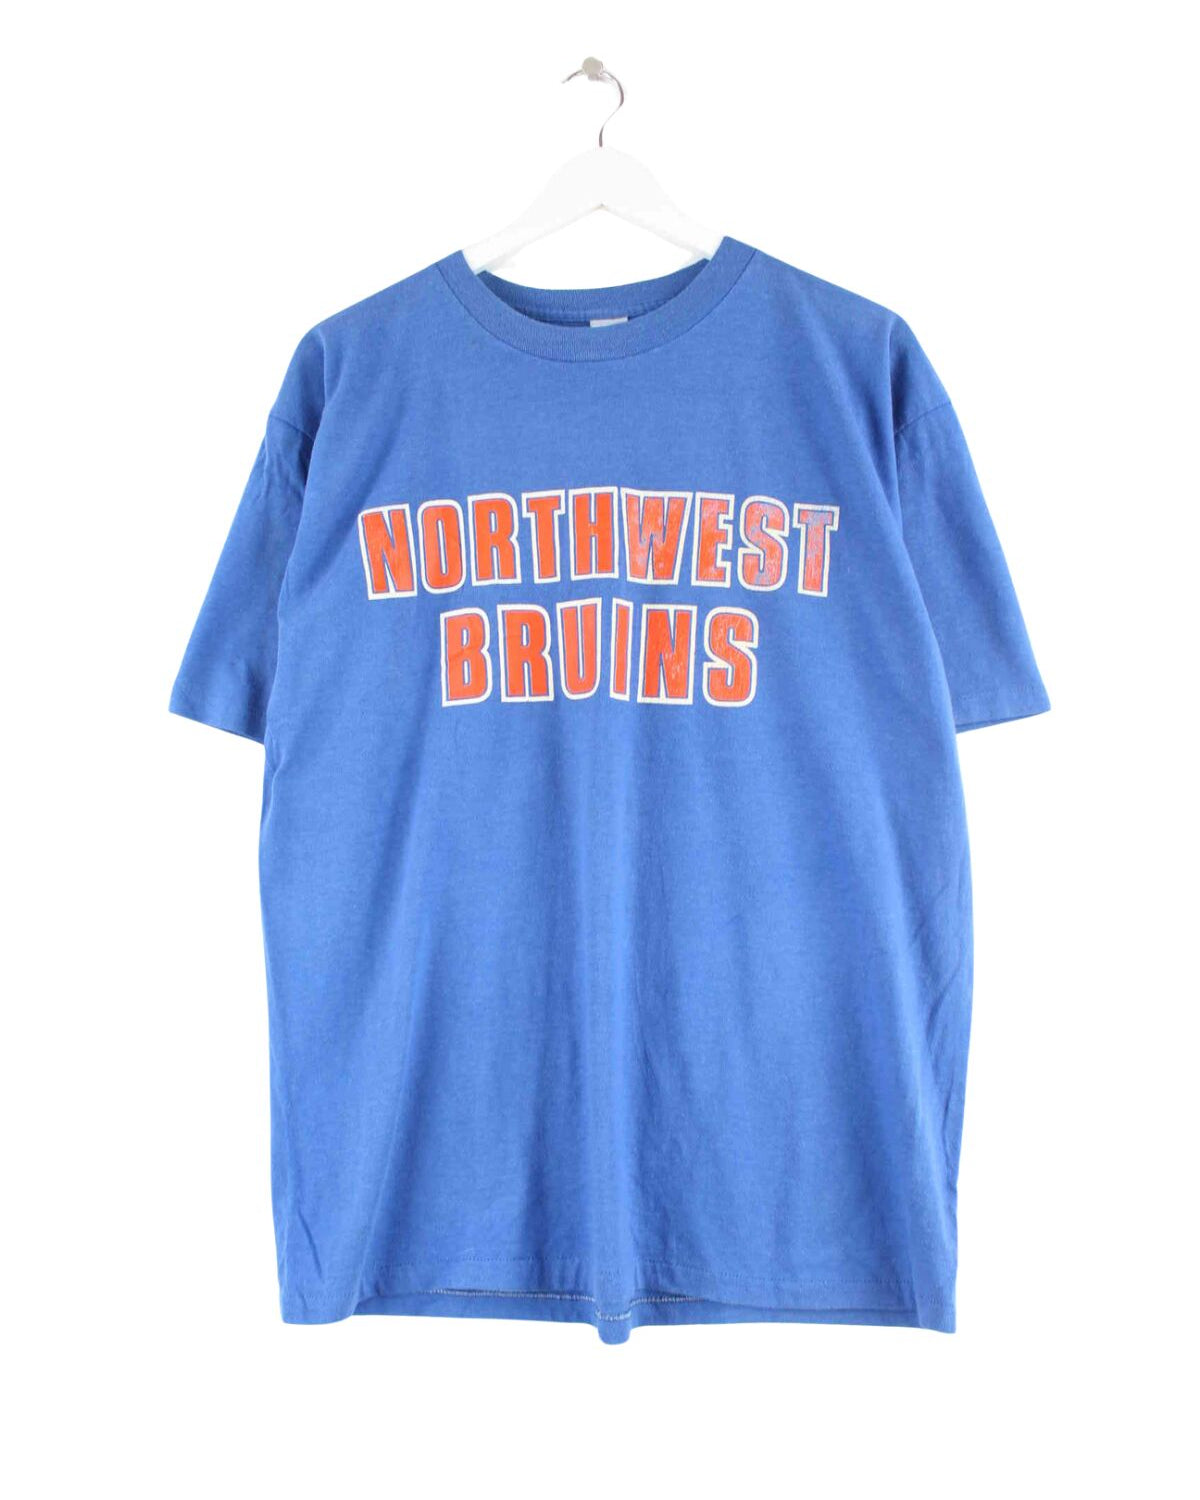 Vintage 90s Northwest Bruins Print Single Stitched T-Shirt Blau L (front image)